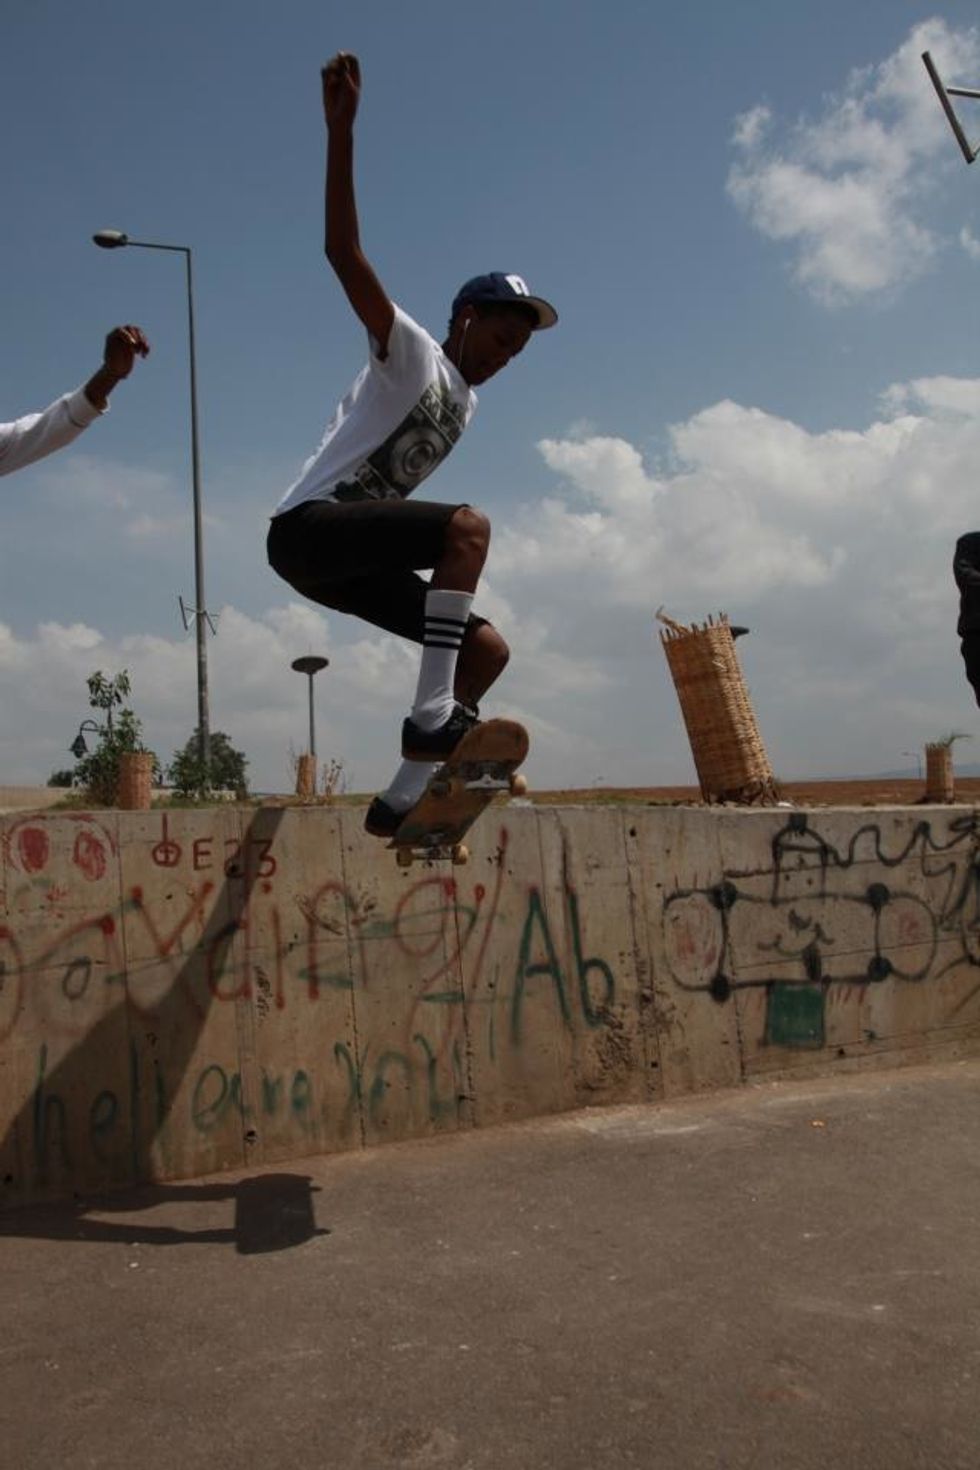 Ethiopia Skate Campaign